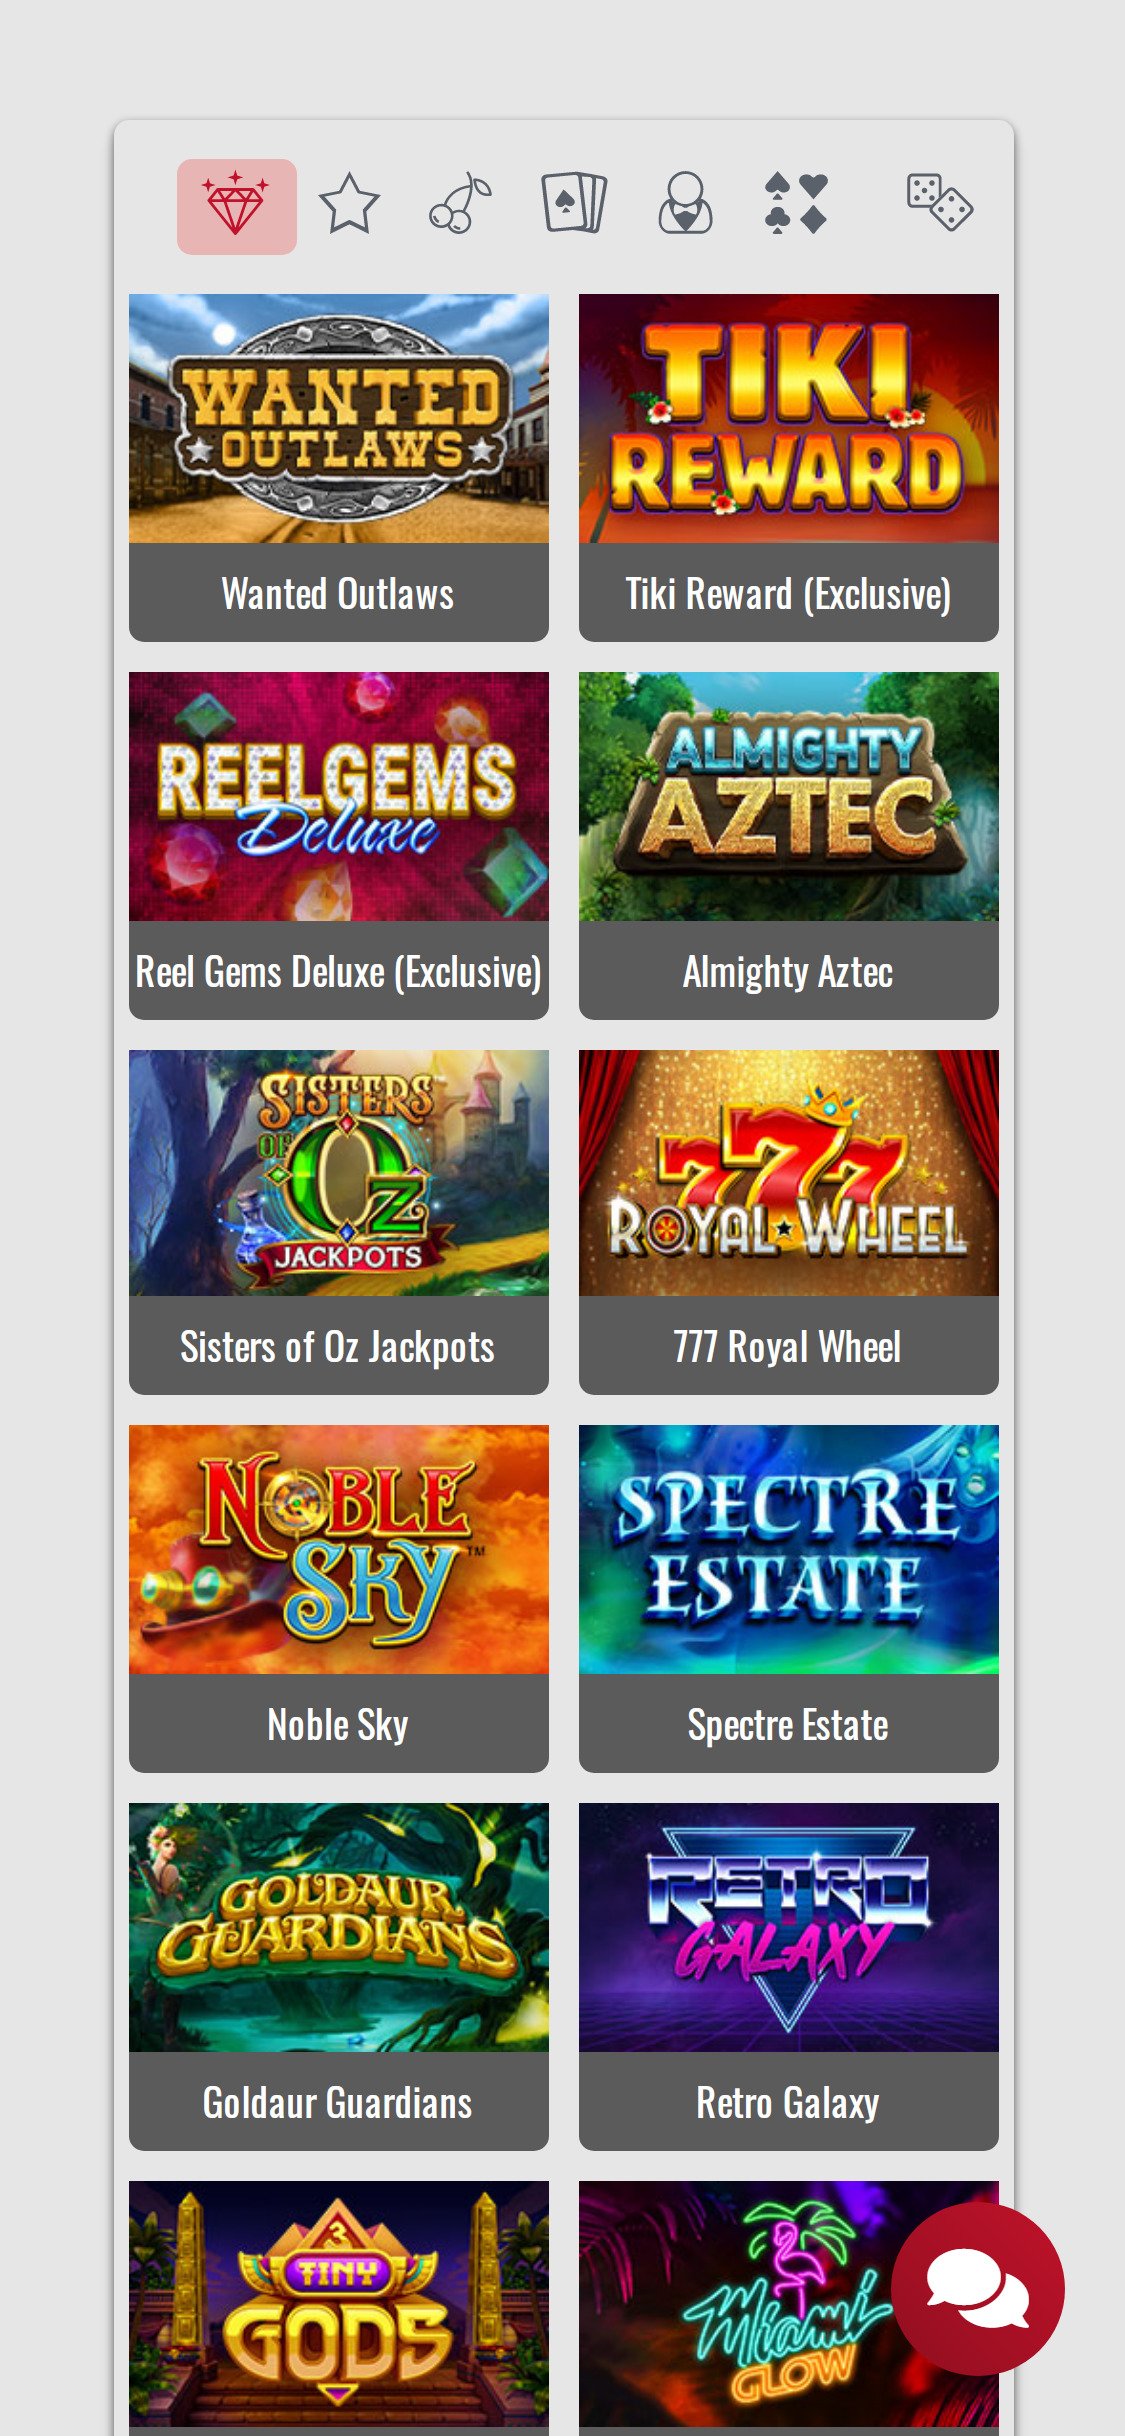 Platinum Play Casino Mobile Games Review